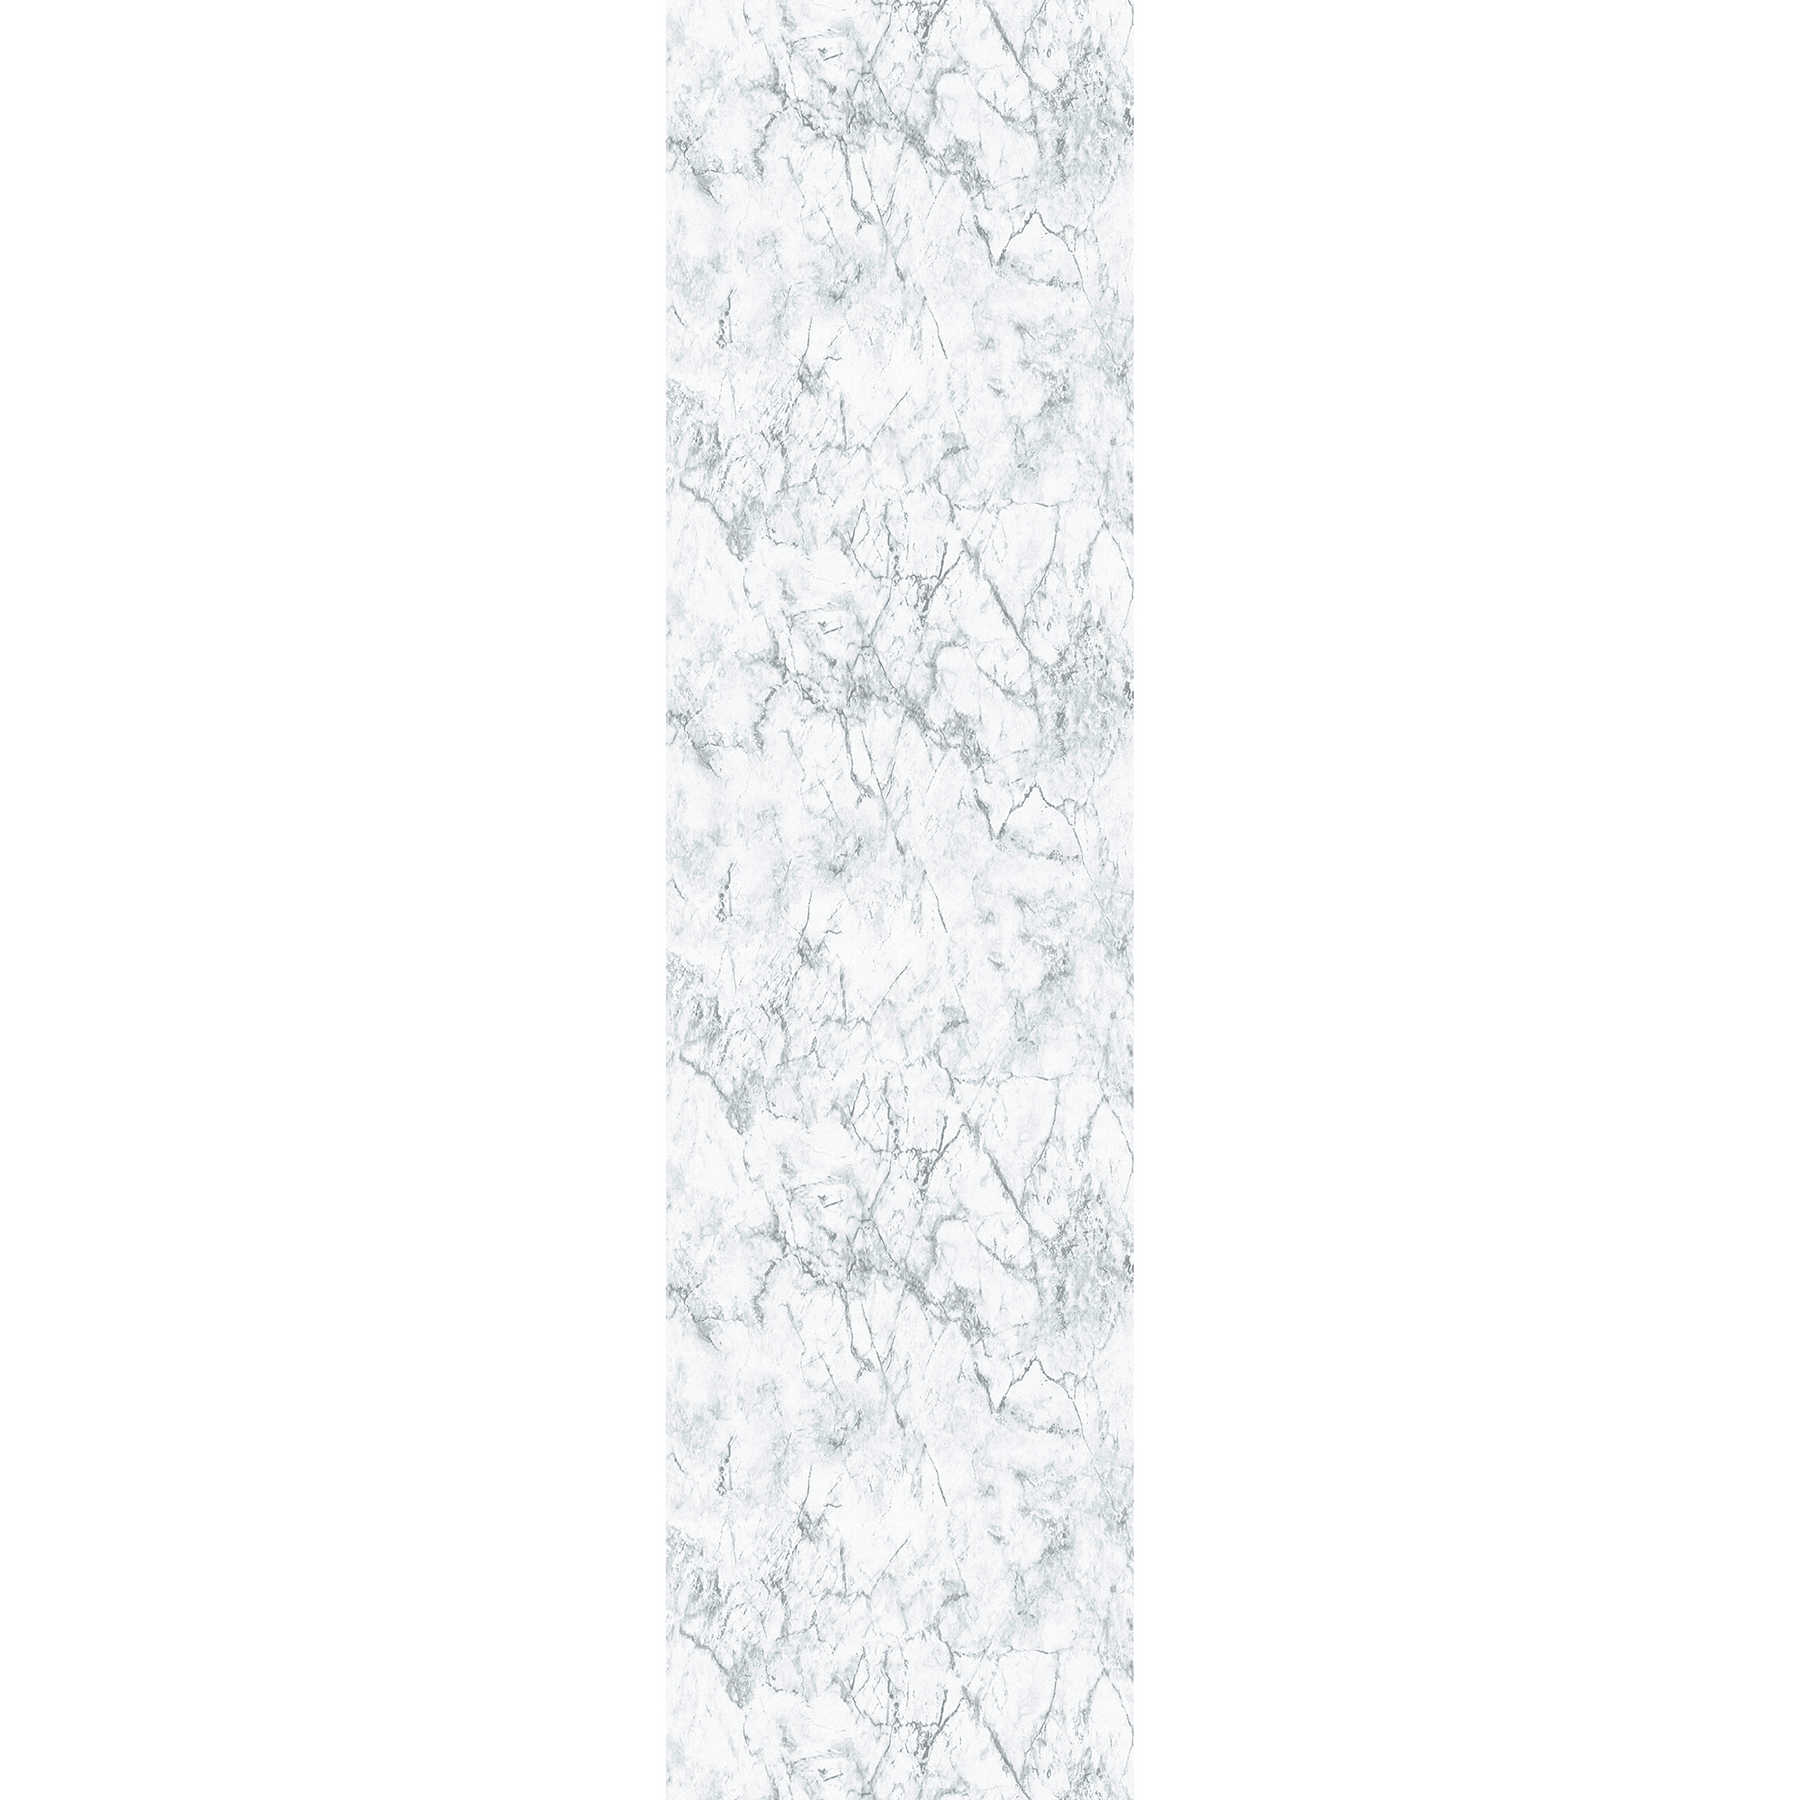 Marmor Tapete marmorierte Steinoptik – Grau, Weiß
